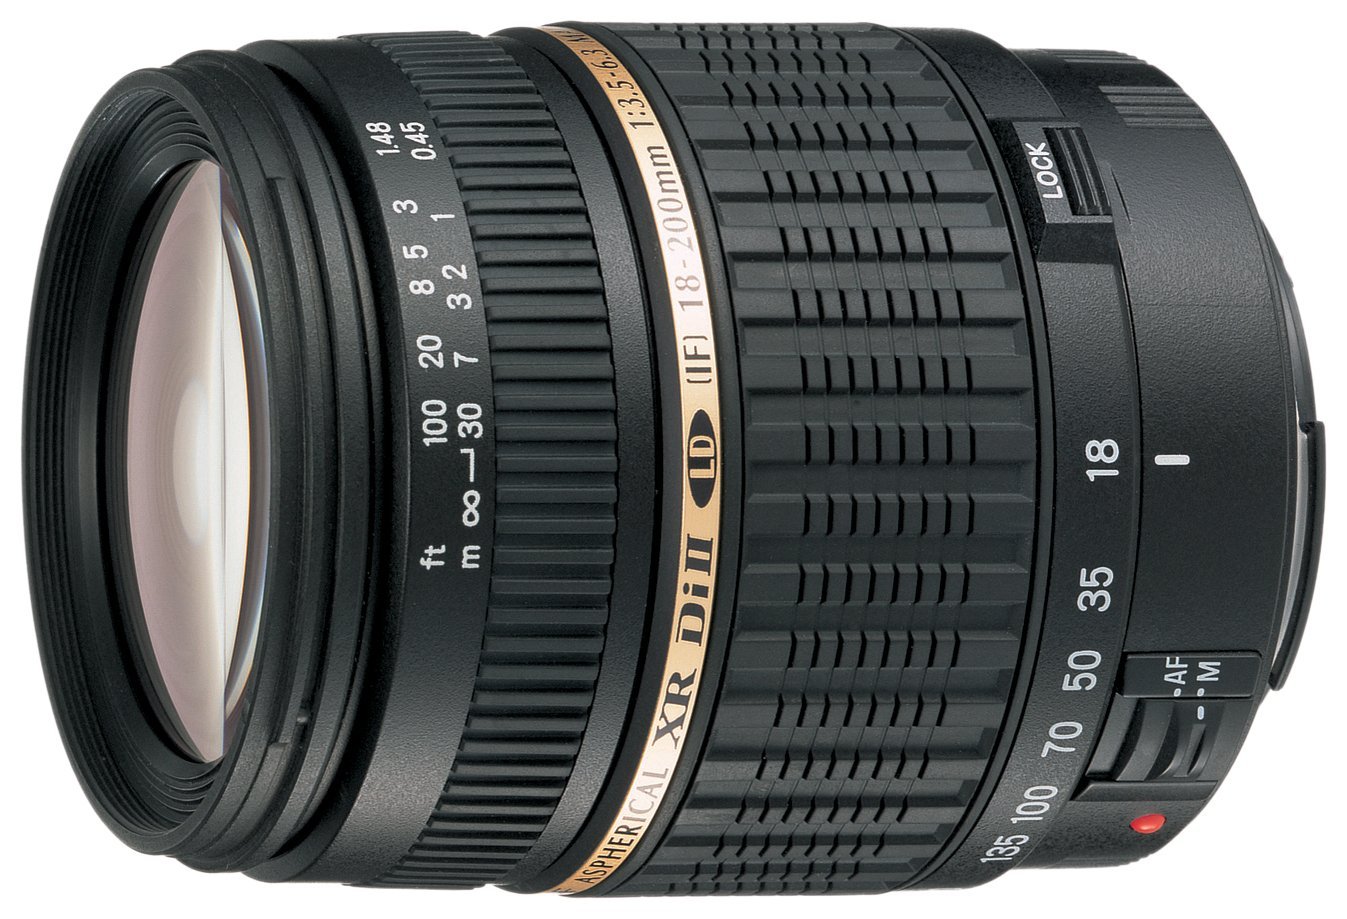 Tamron AF 18-200mm f/3.5-6.3 XR Di II LD Aspherical (IF) Macro Zoom Lens with Built In Motor for Nikon Digital SLR (Model A14NII) Reviews